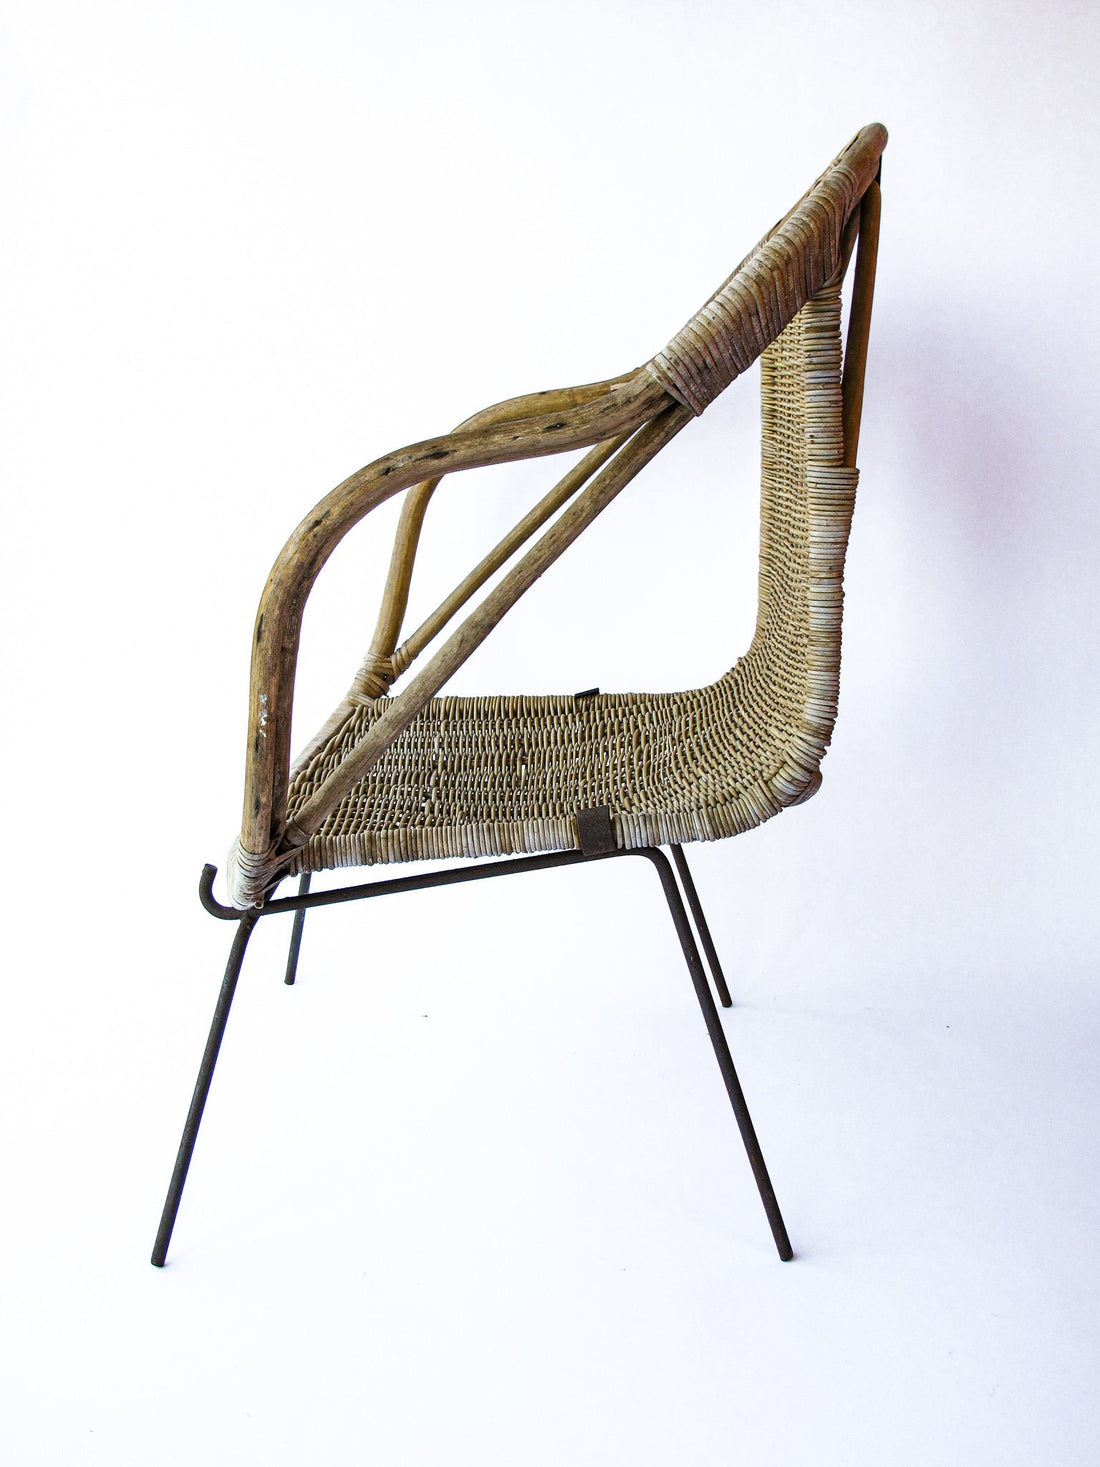 Adorable Petite Vintage Rustic Bohemian Peacock Woven Barrel Chair